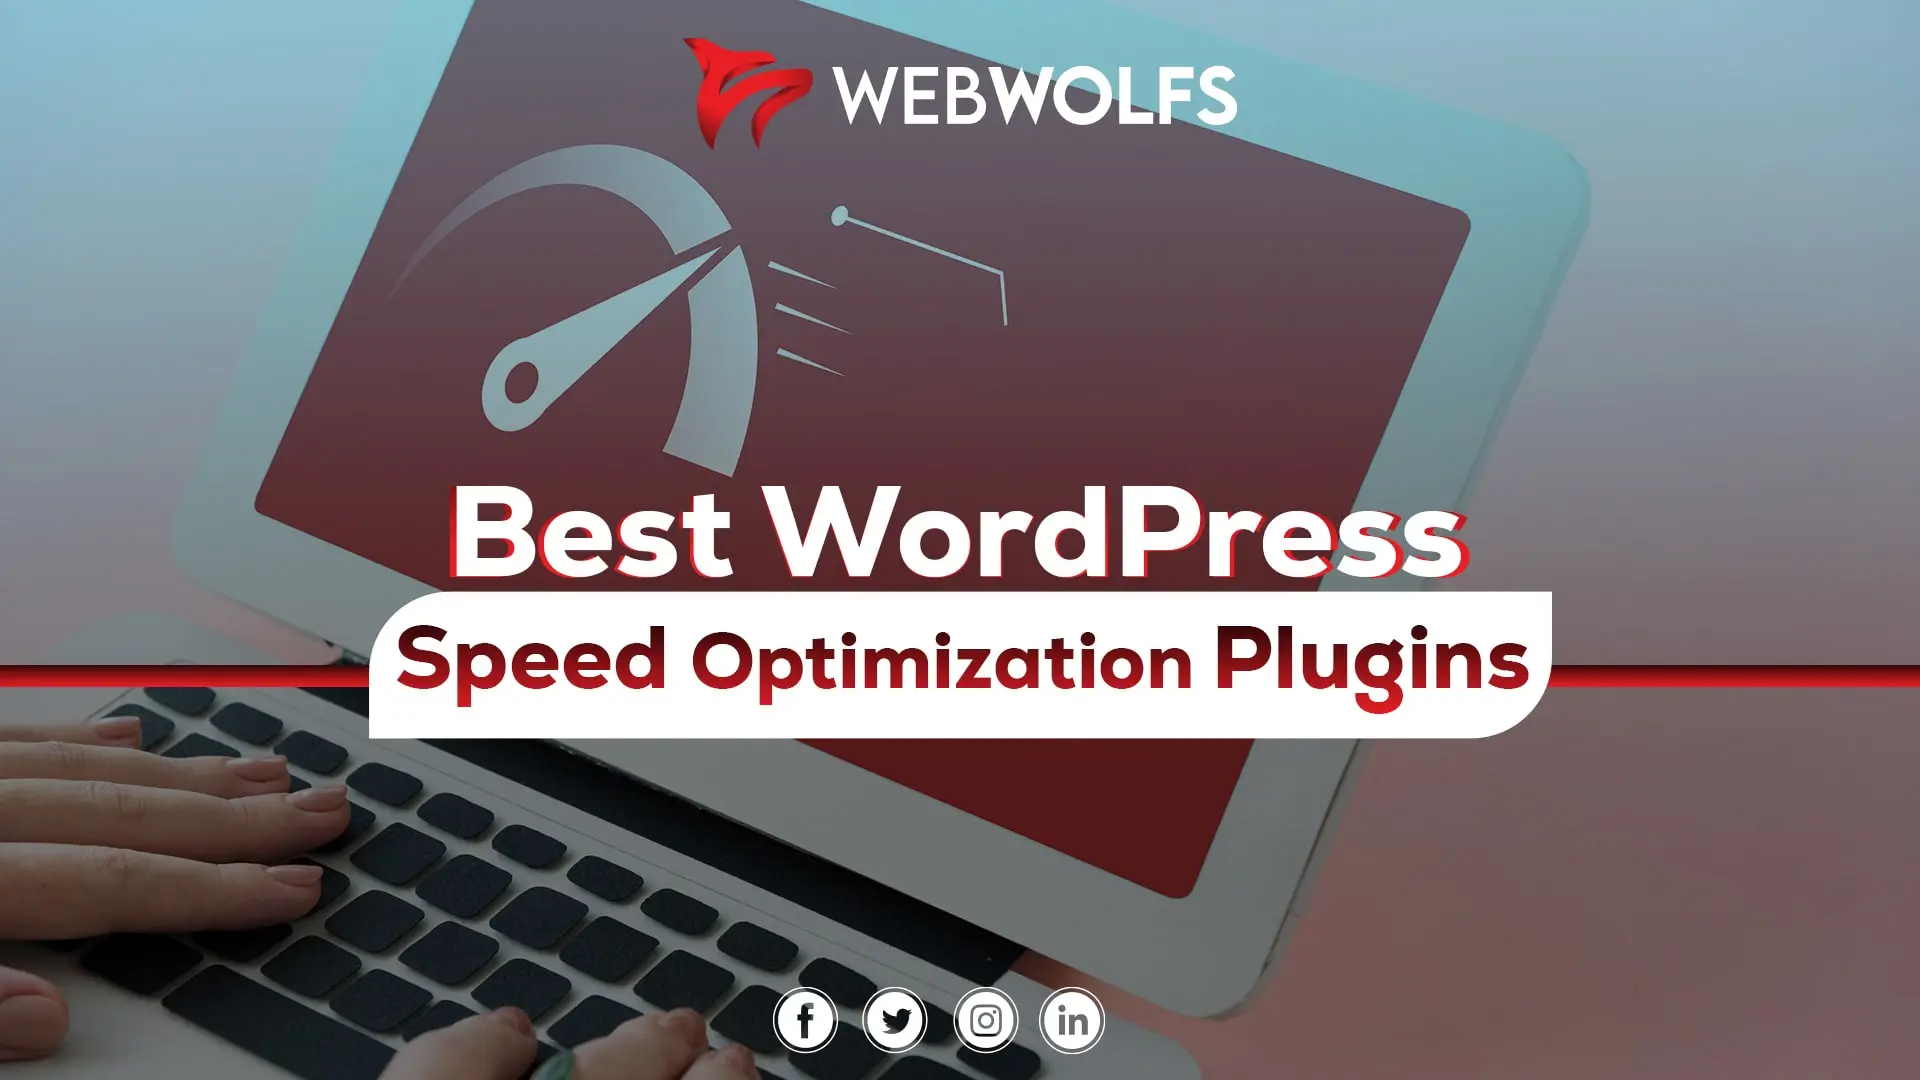 Best WordPress Speed Optimization Plugins